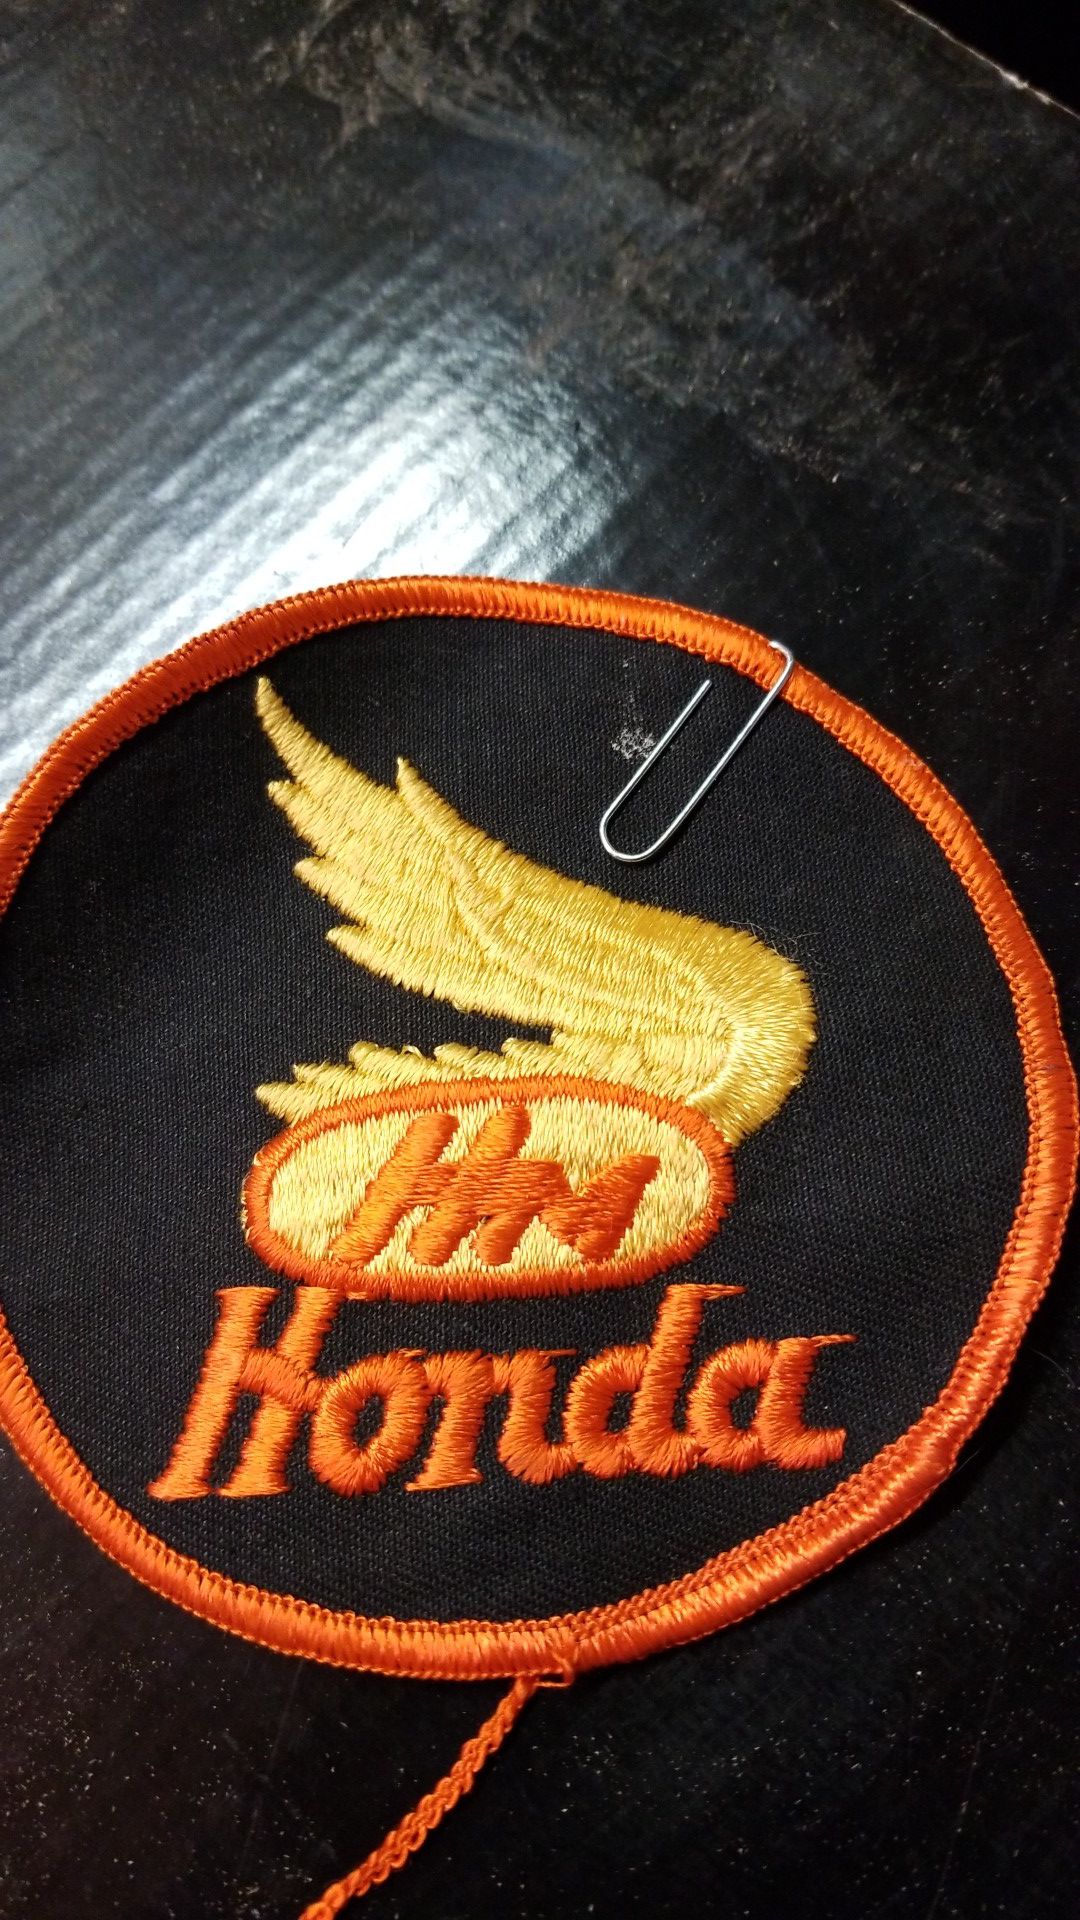 Vintage Honda motorcycle patch